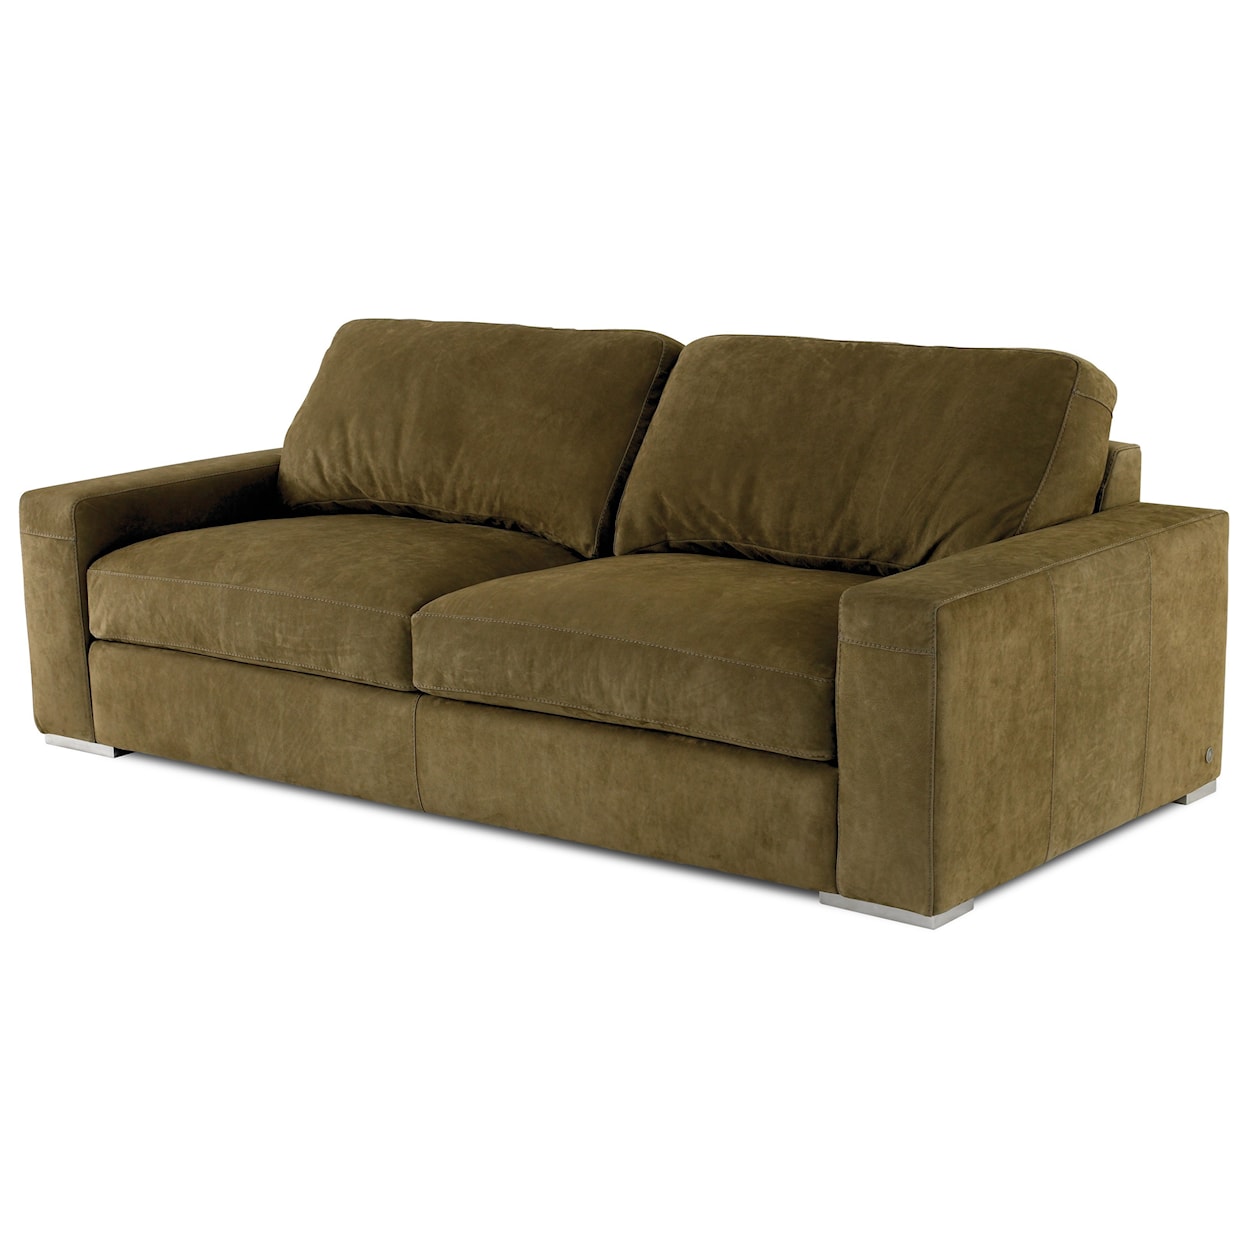 American Leather Westchester 2-Cushion Sofa